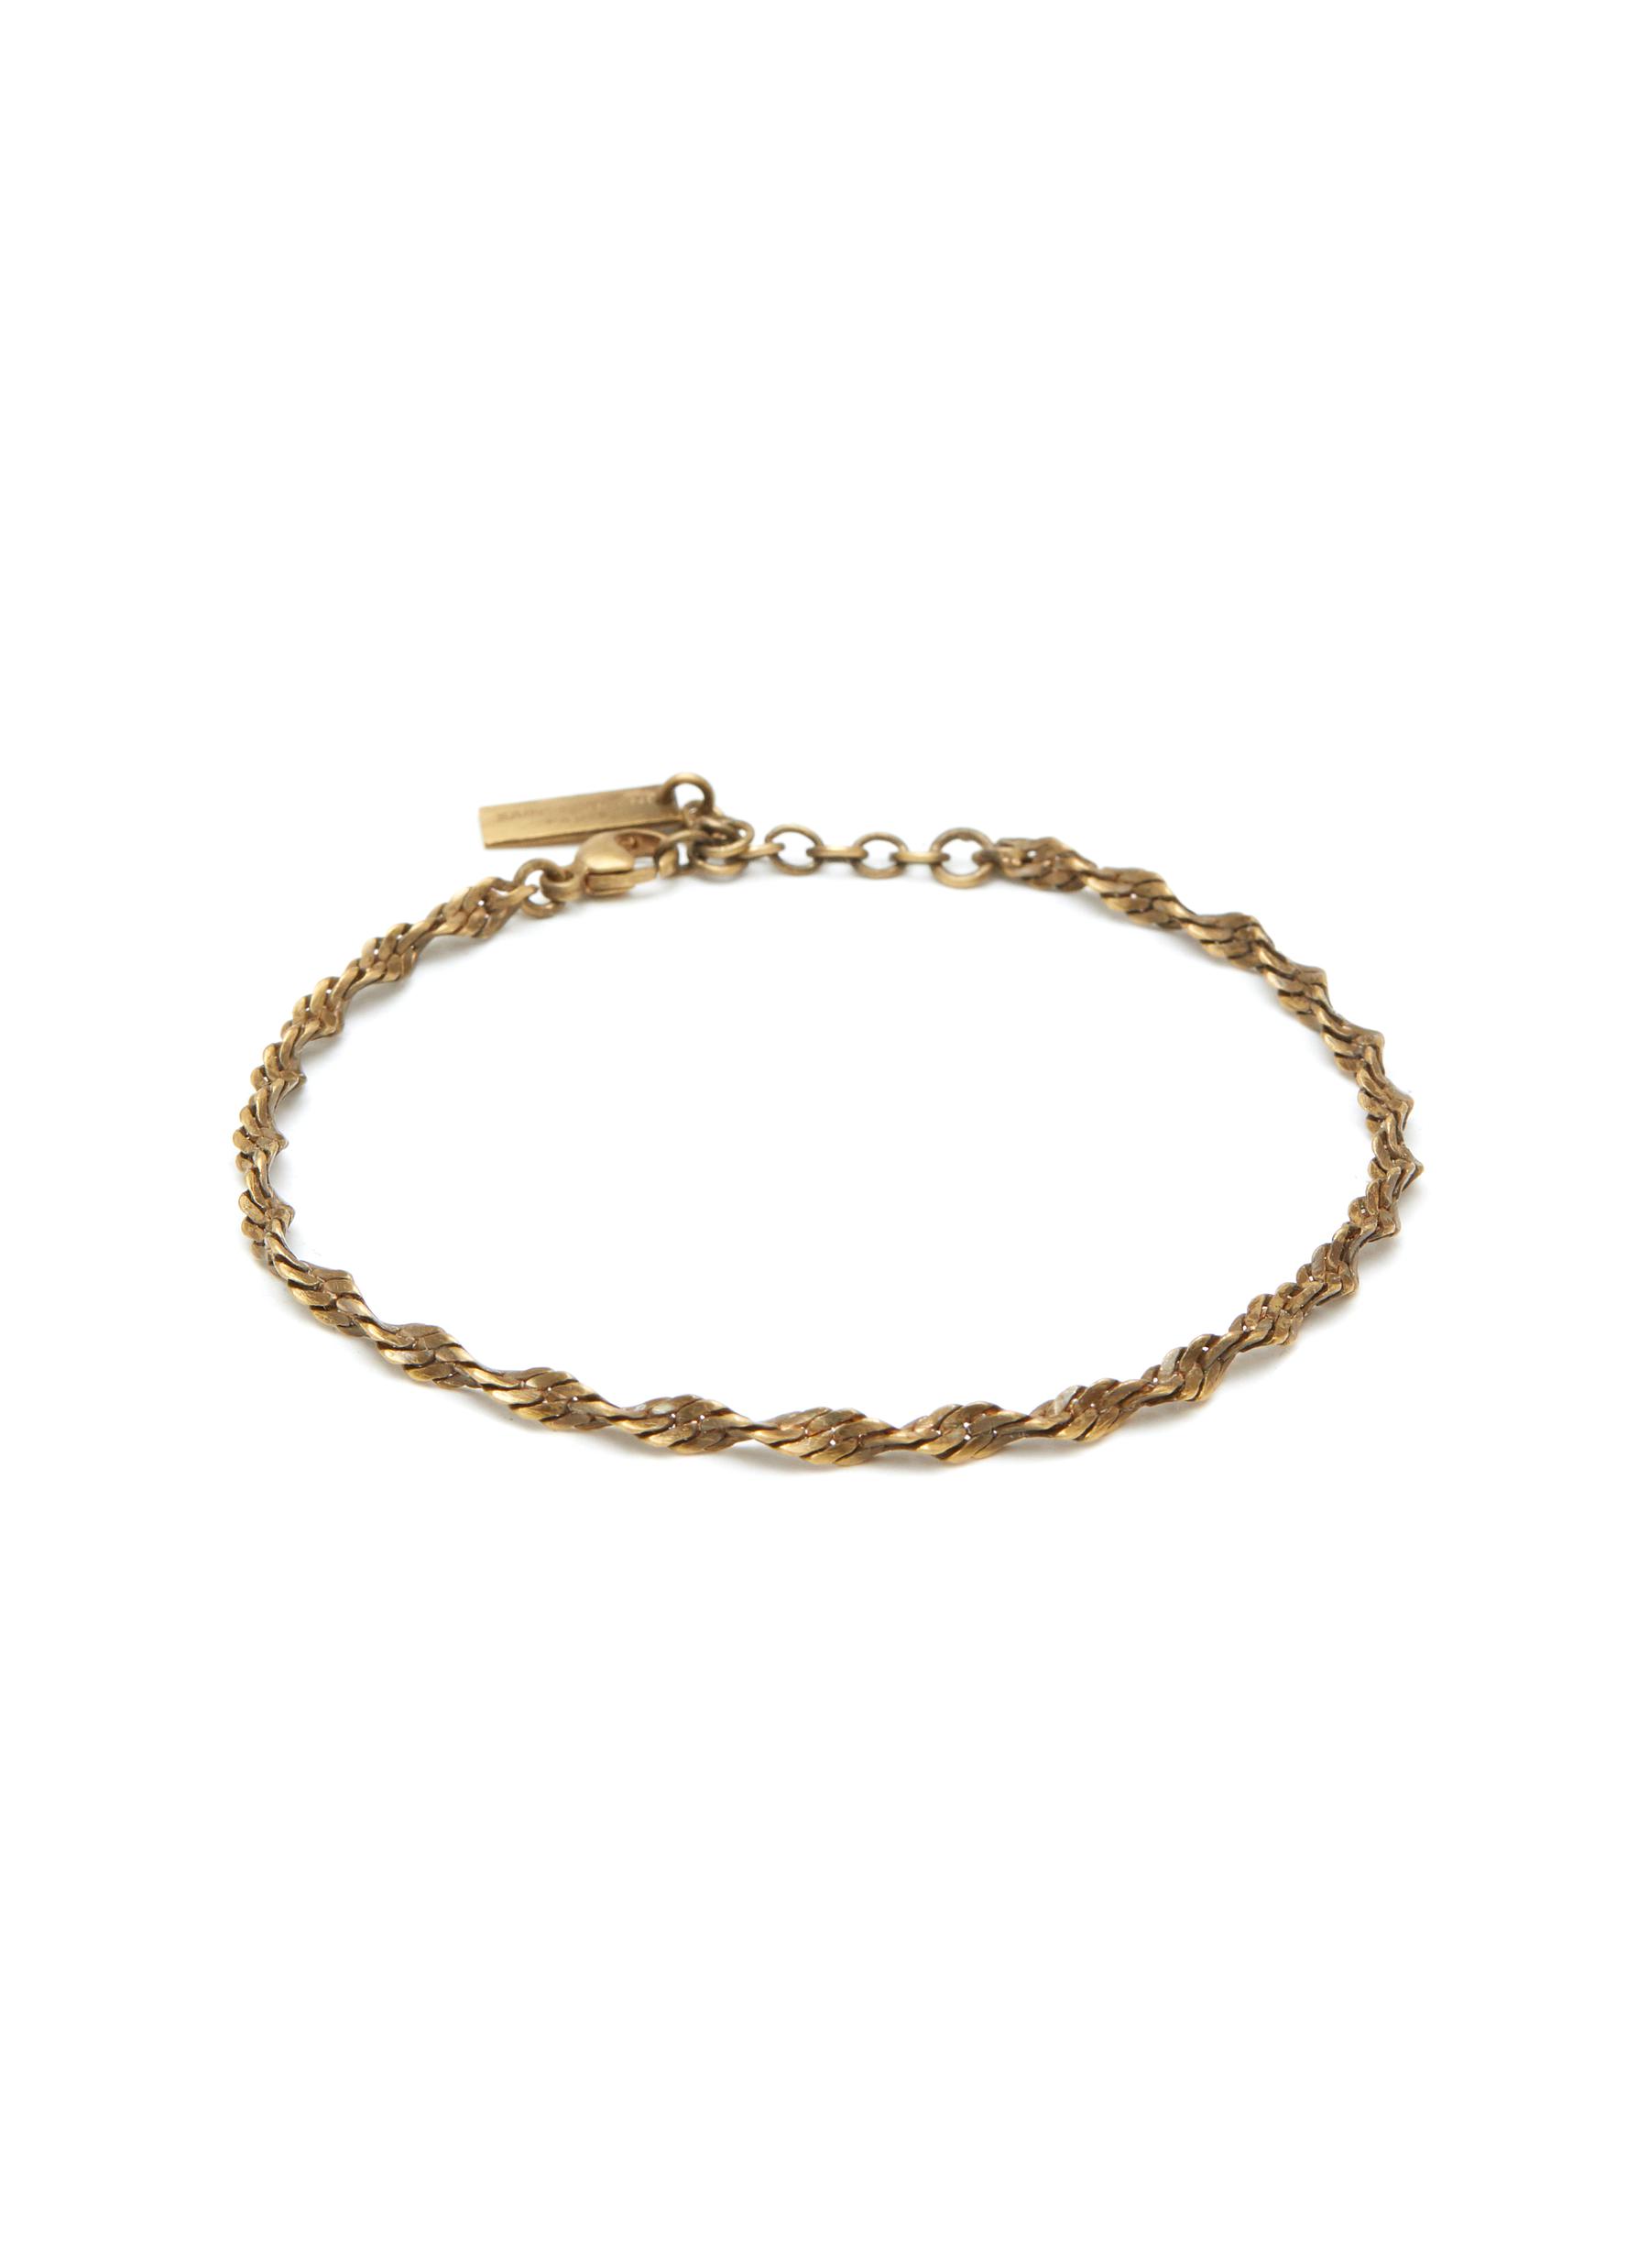 YSL bracelet in gold - Saint Laurent | Mytheresa | Armband, Handgelenk, Saint  laurent